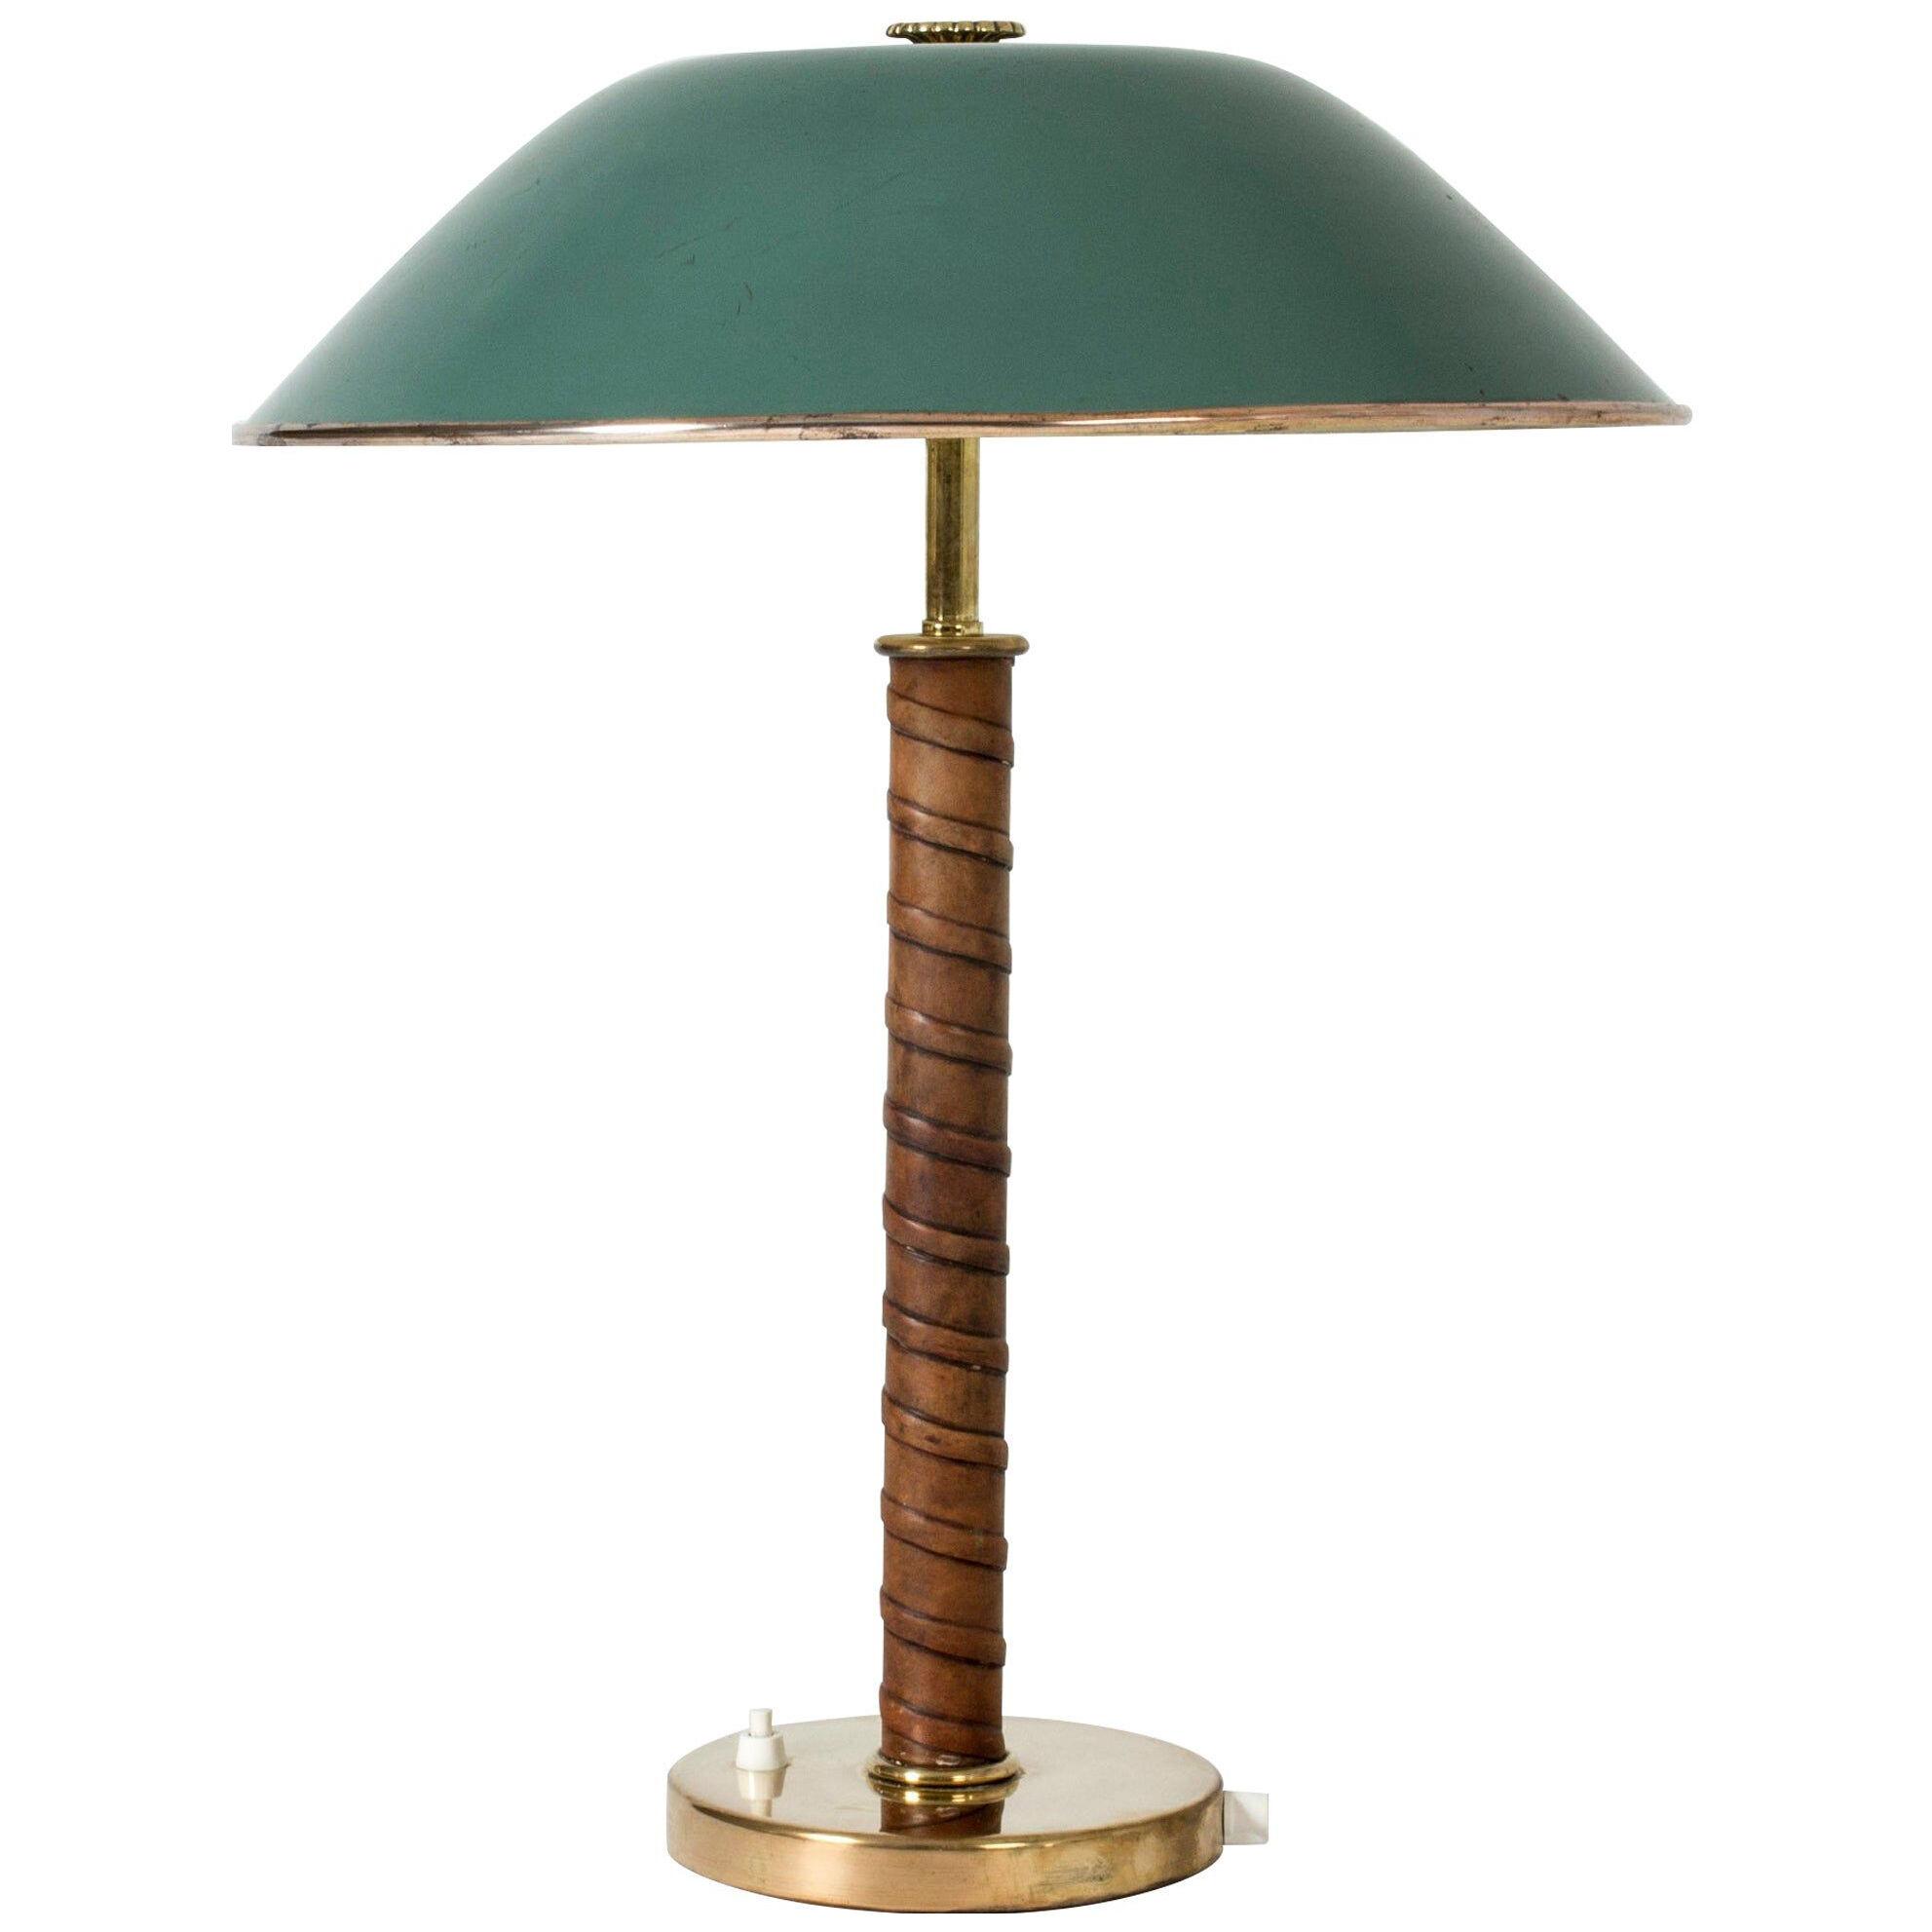 Nordiska Kompaniet Brass Table Lamp with Green Lacquered Shade